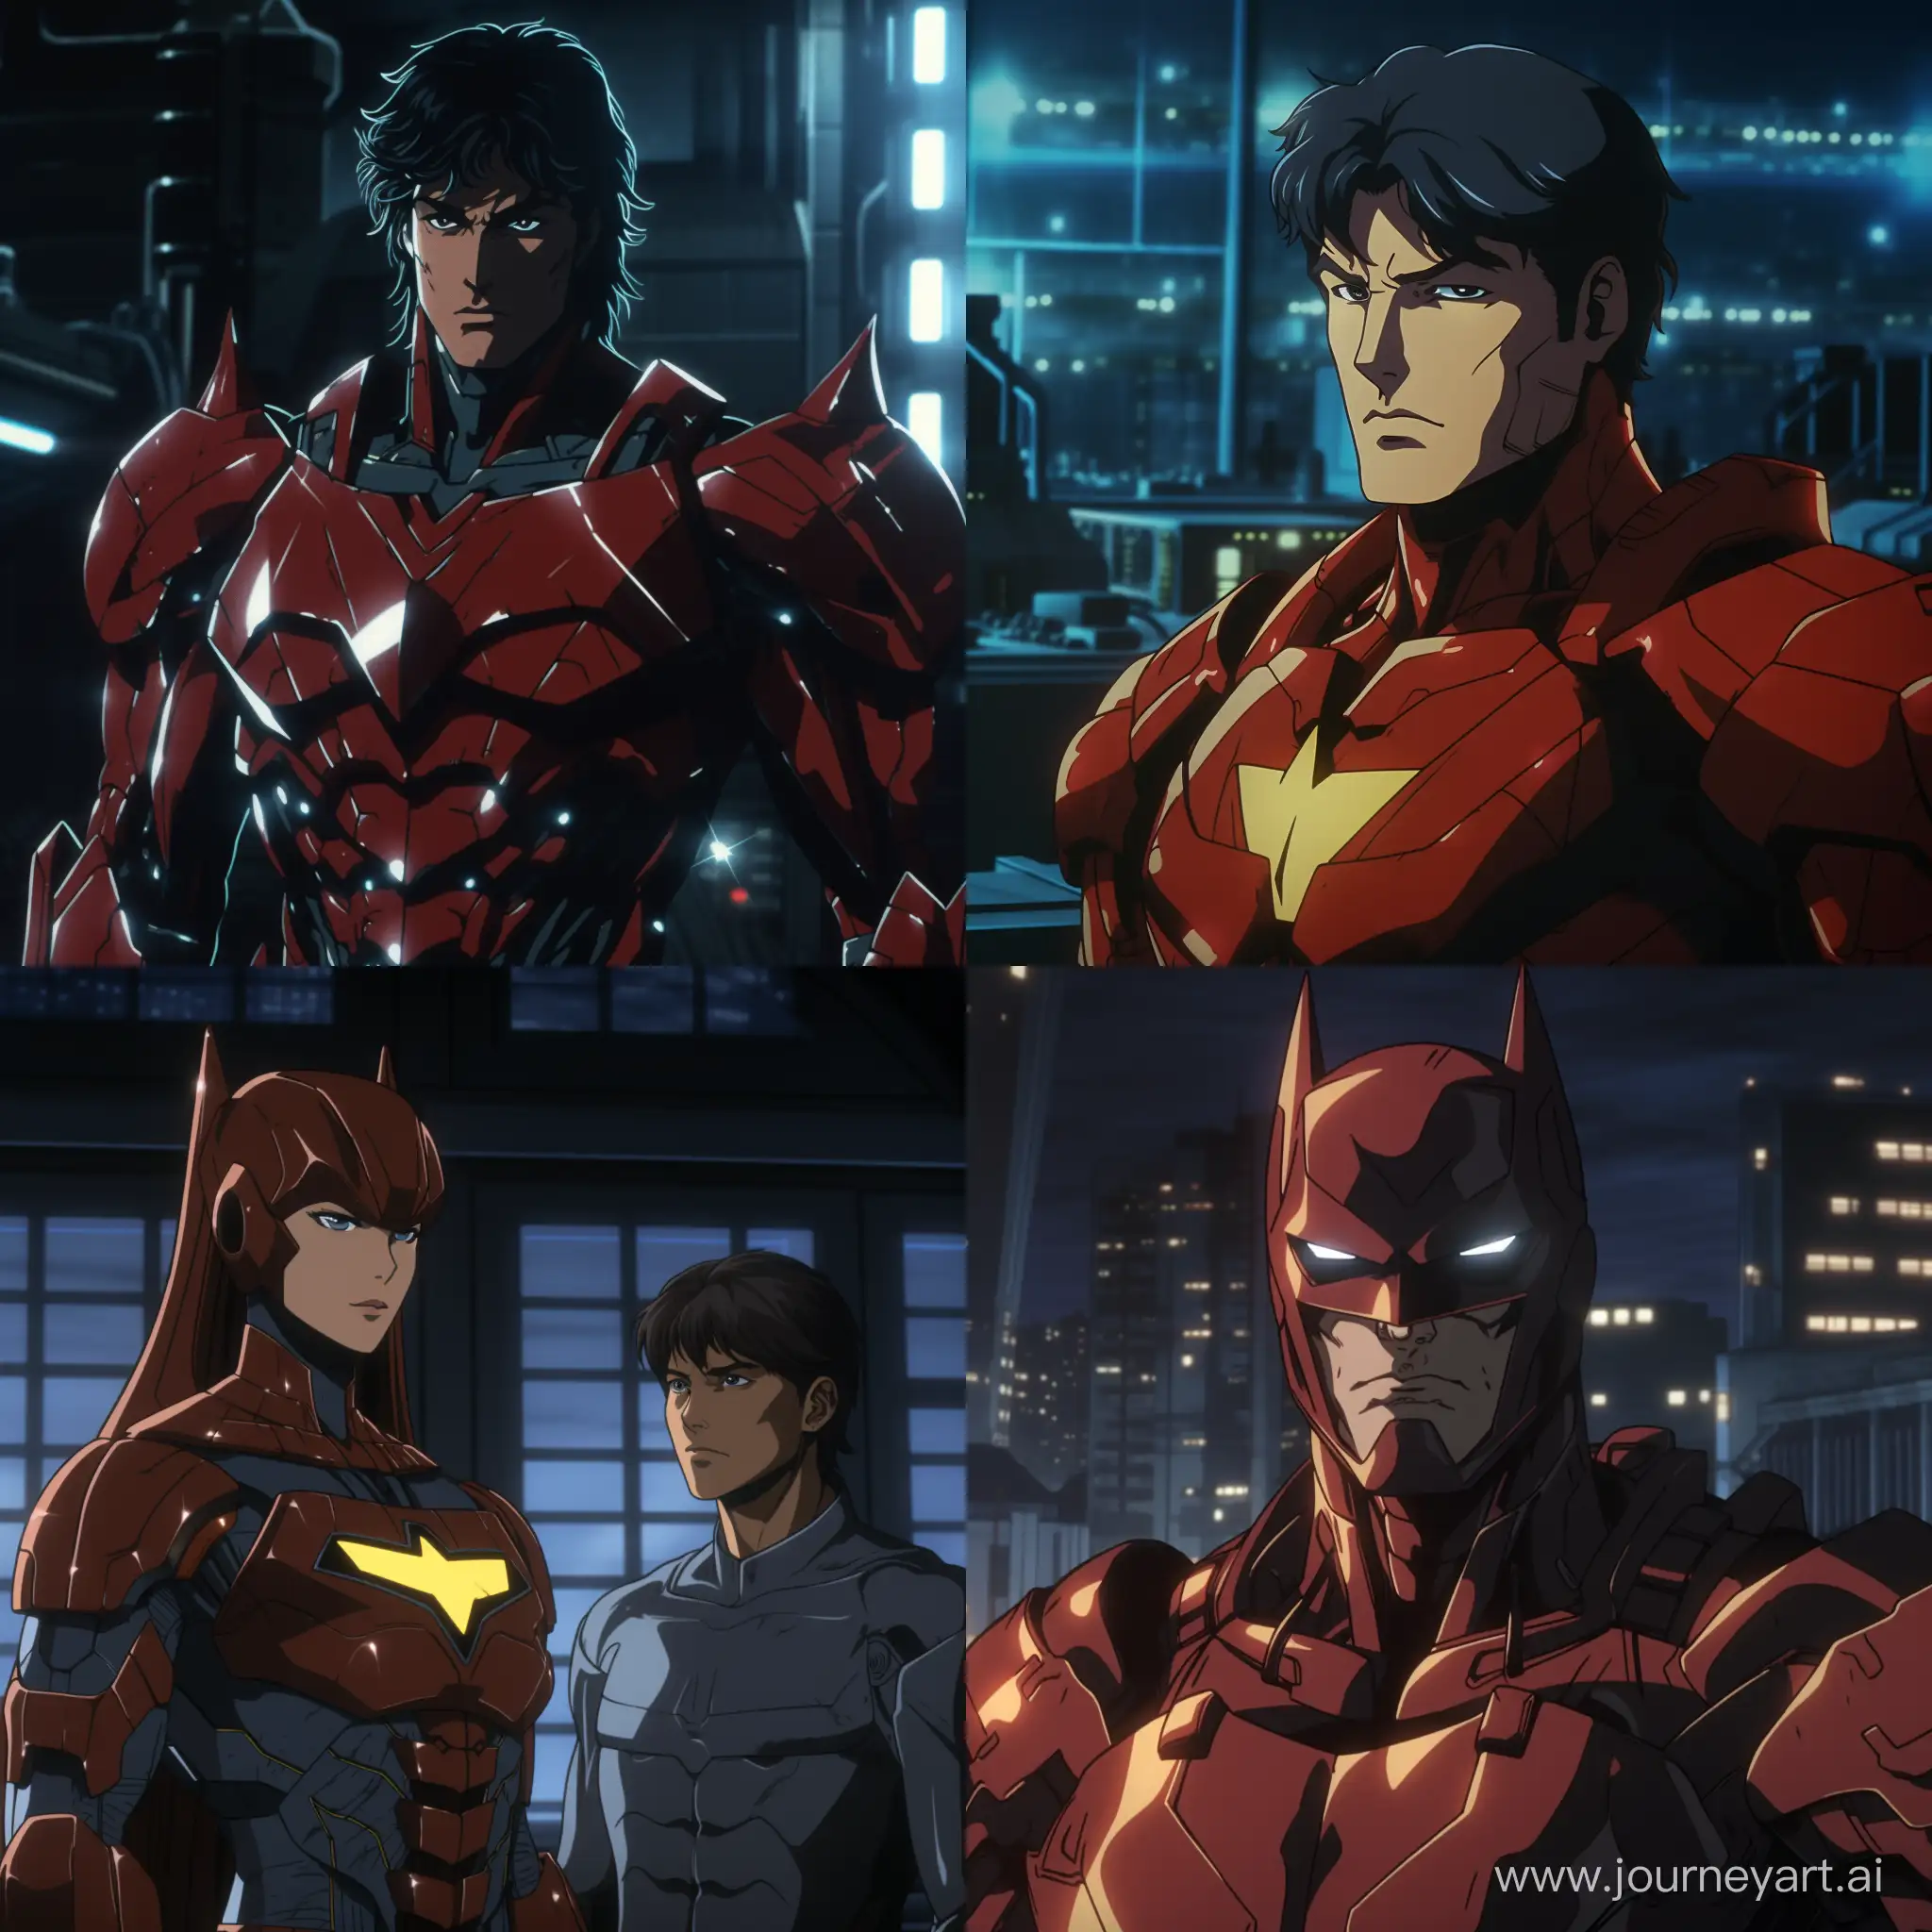 1980s-AnimeInspired-Batman-in-Iron-Man-Costume